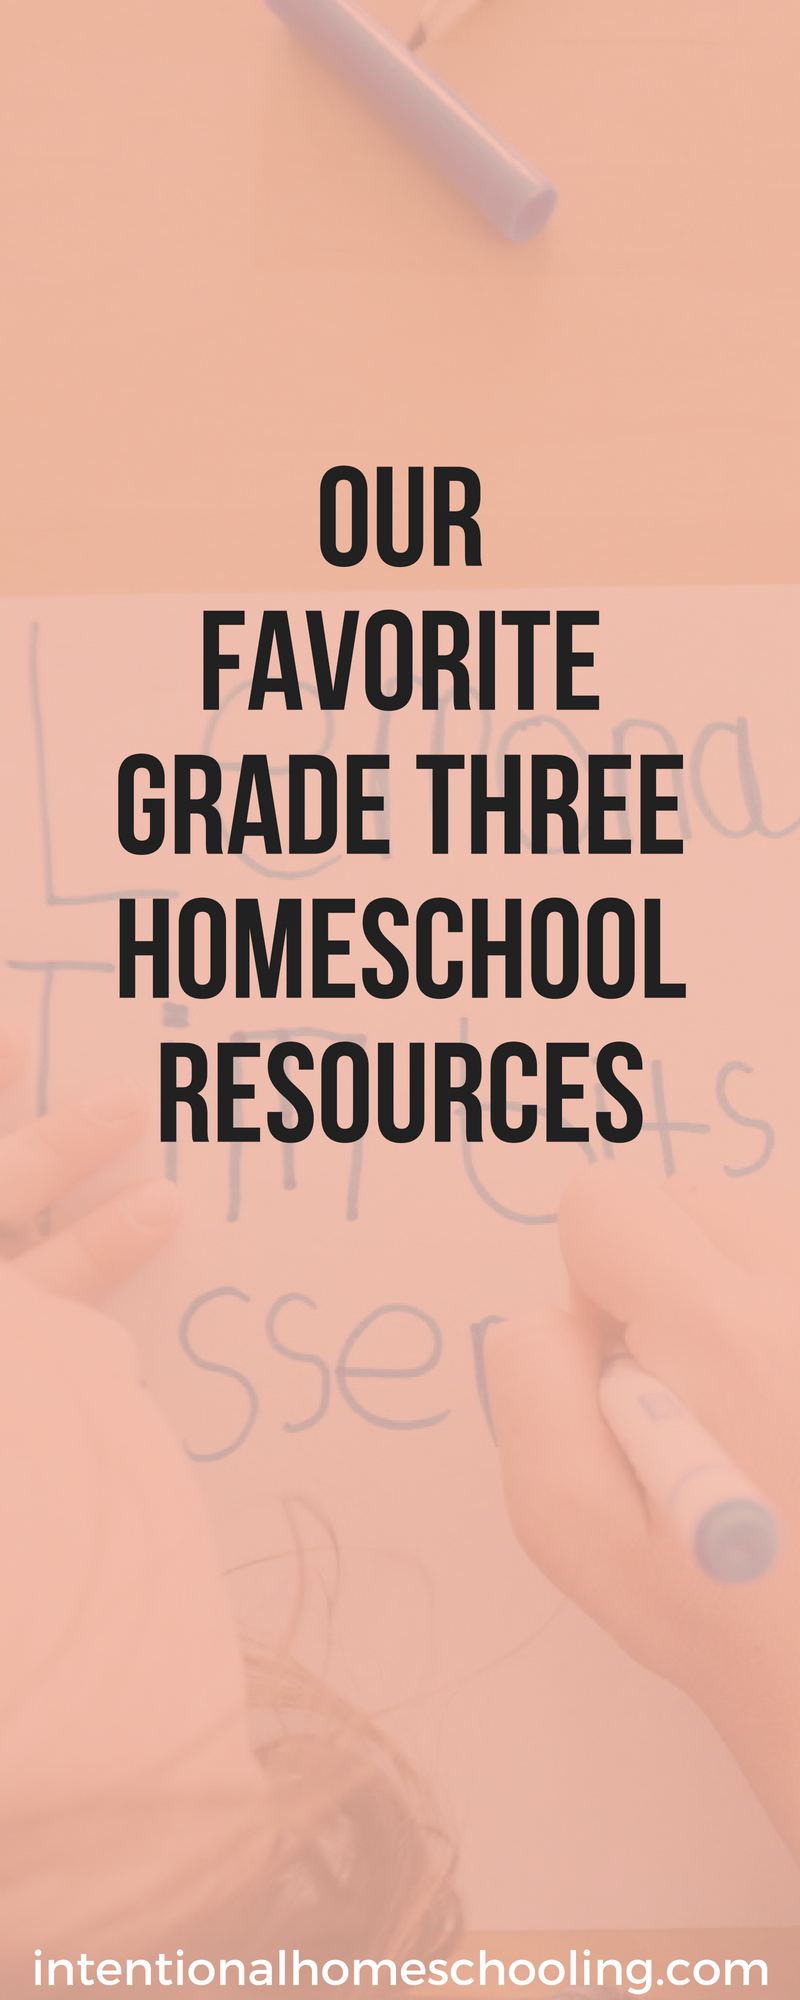 Our Favorite Grade Three Homeschool Resources